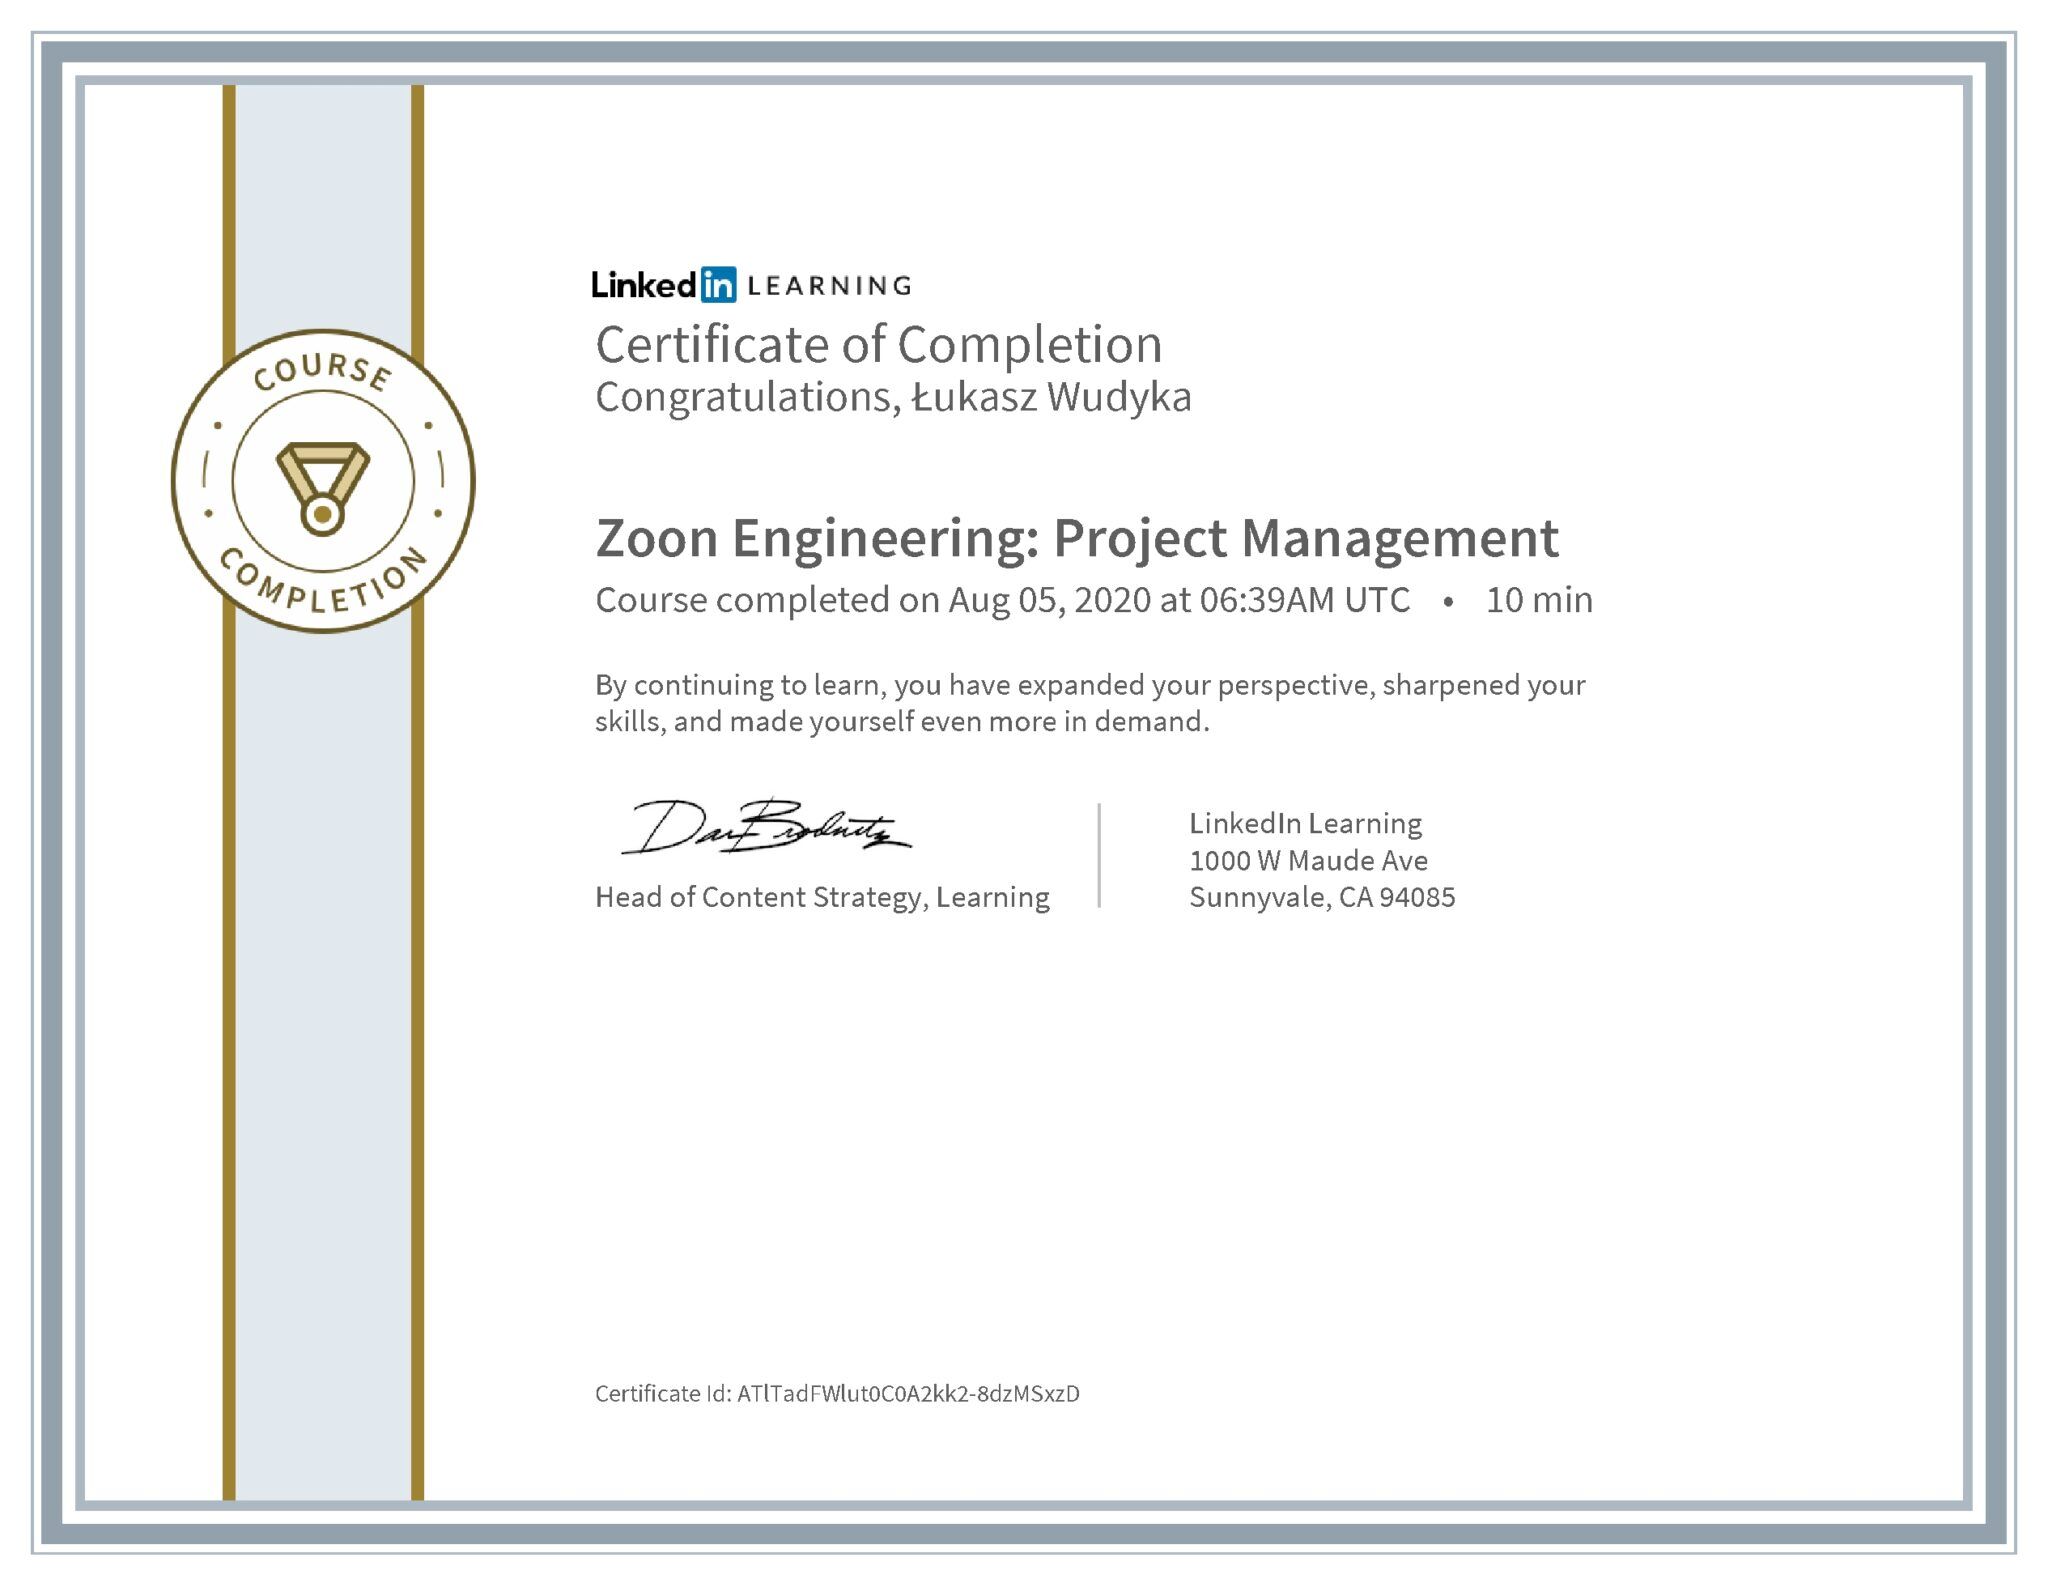 Łukasz Wudyka certyfikat LinkedIn Zoon Engineering: Project Management